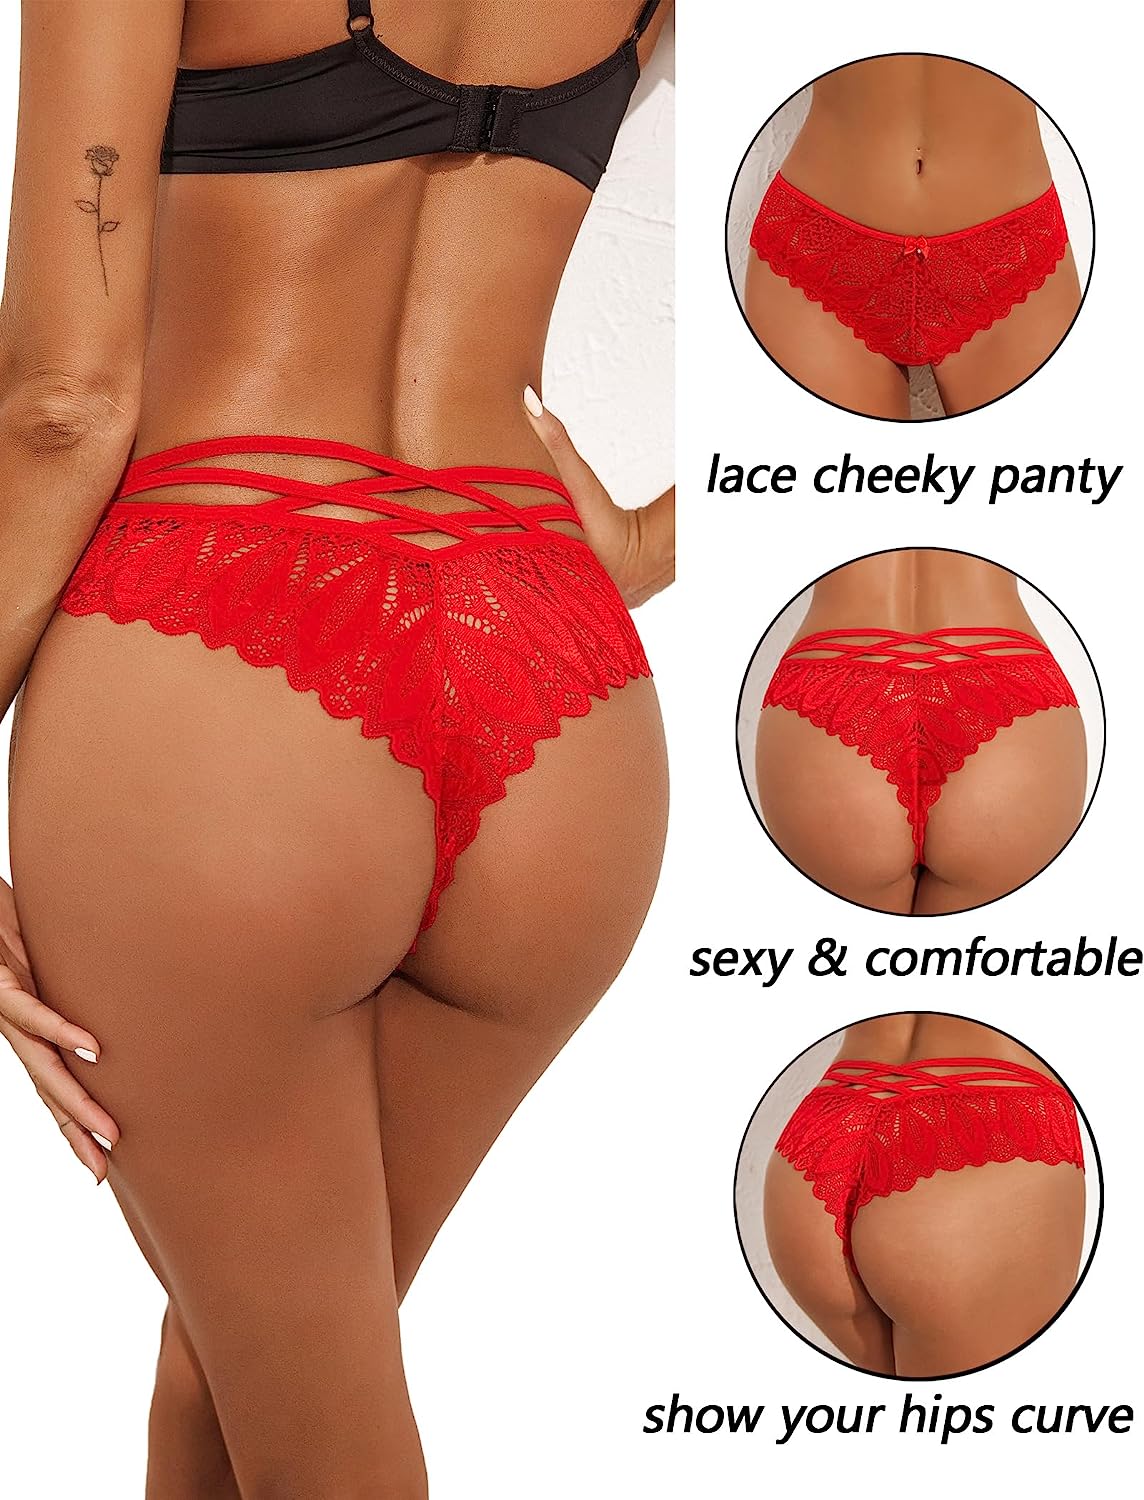 Avidlove Cheeky Panties for Lace Criss Cross Bikini Underwear Pack